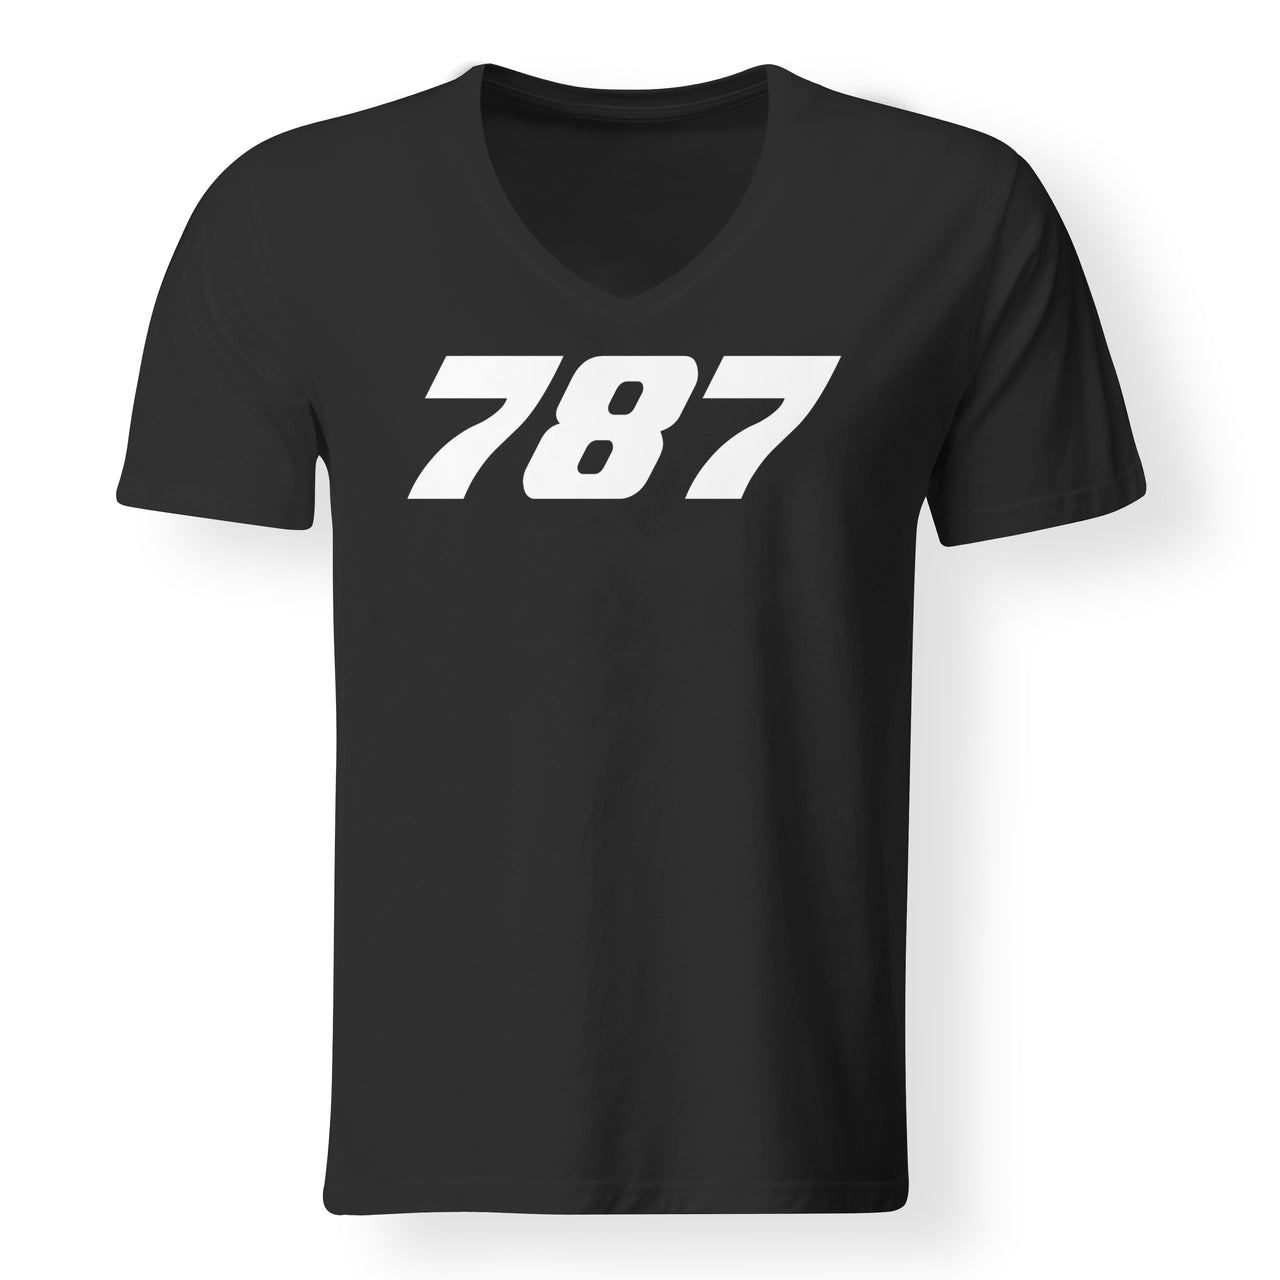 787 Flat Text Designed V-Neck T-Shirts